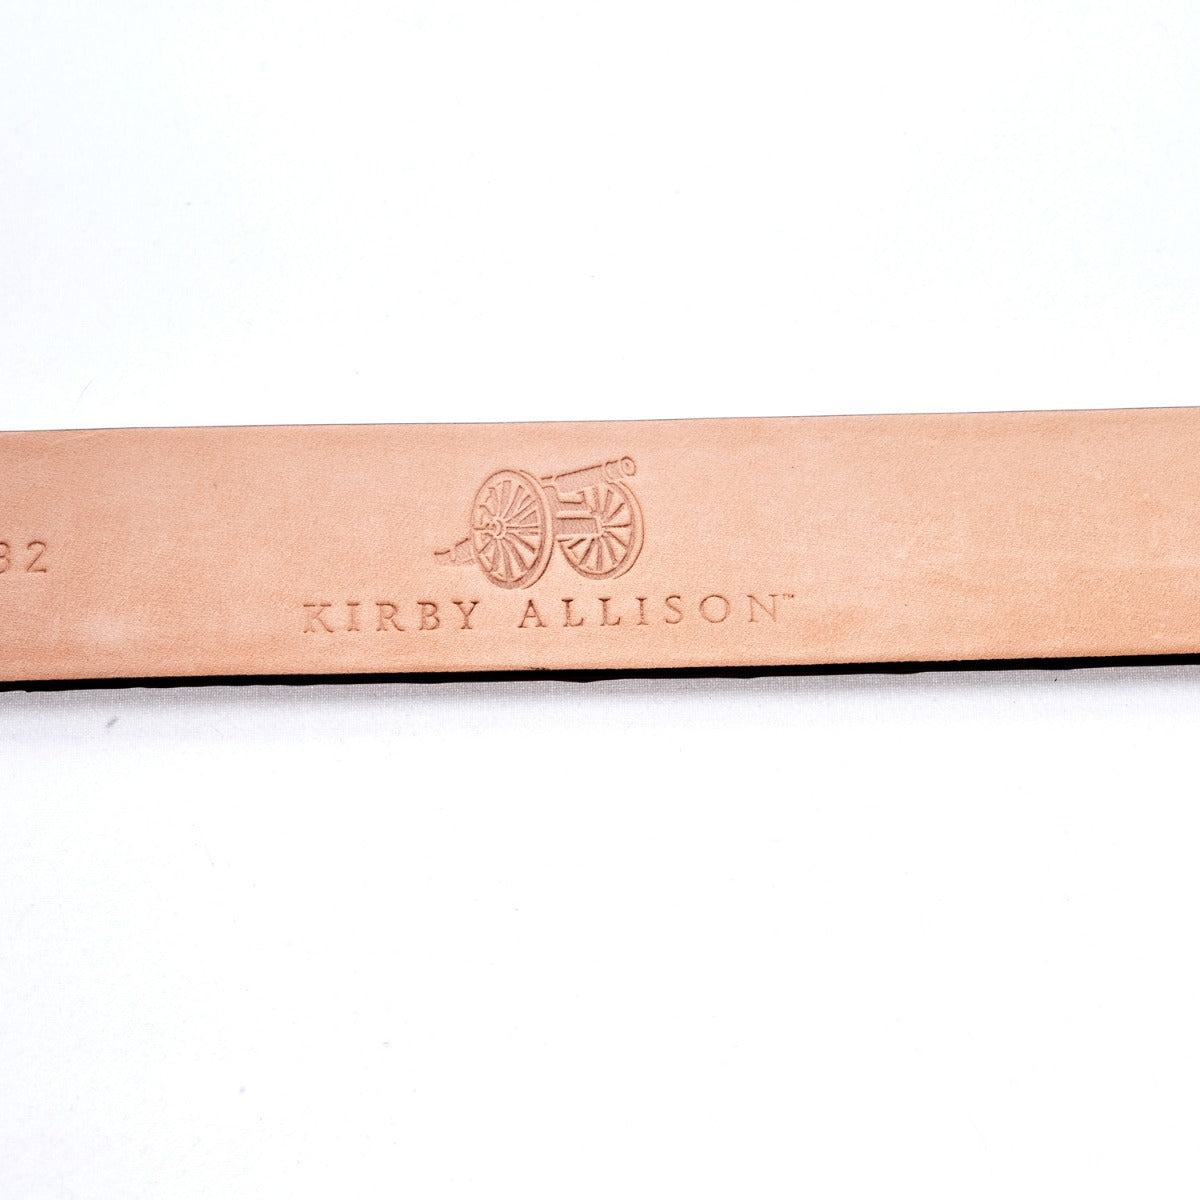 Handcrafted Sovereign Grade Medium Brown Crocodile Belt with a satin finish and KirbyAllison.com logo.